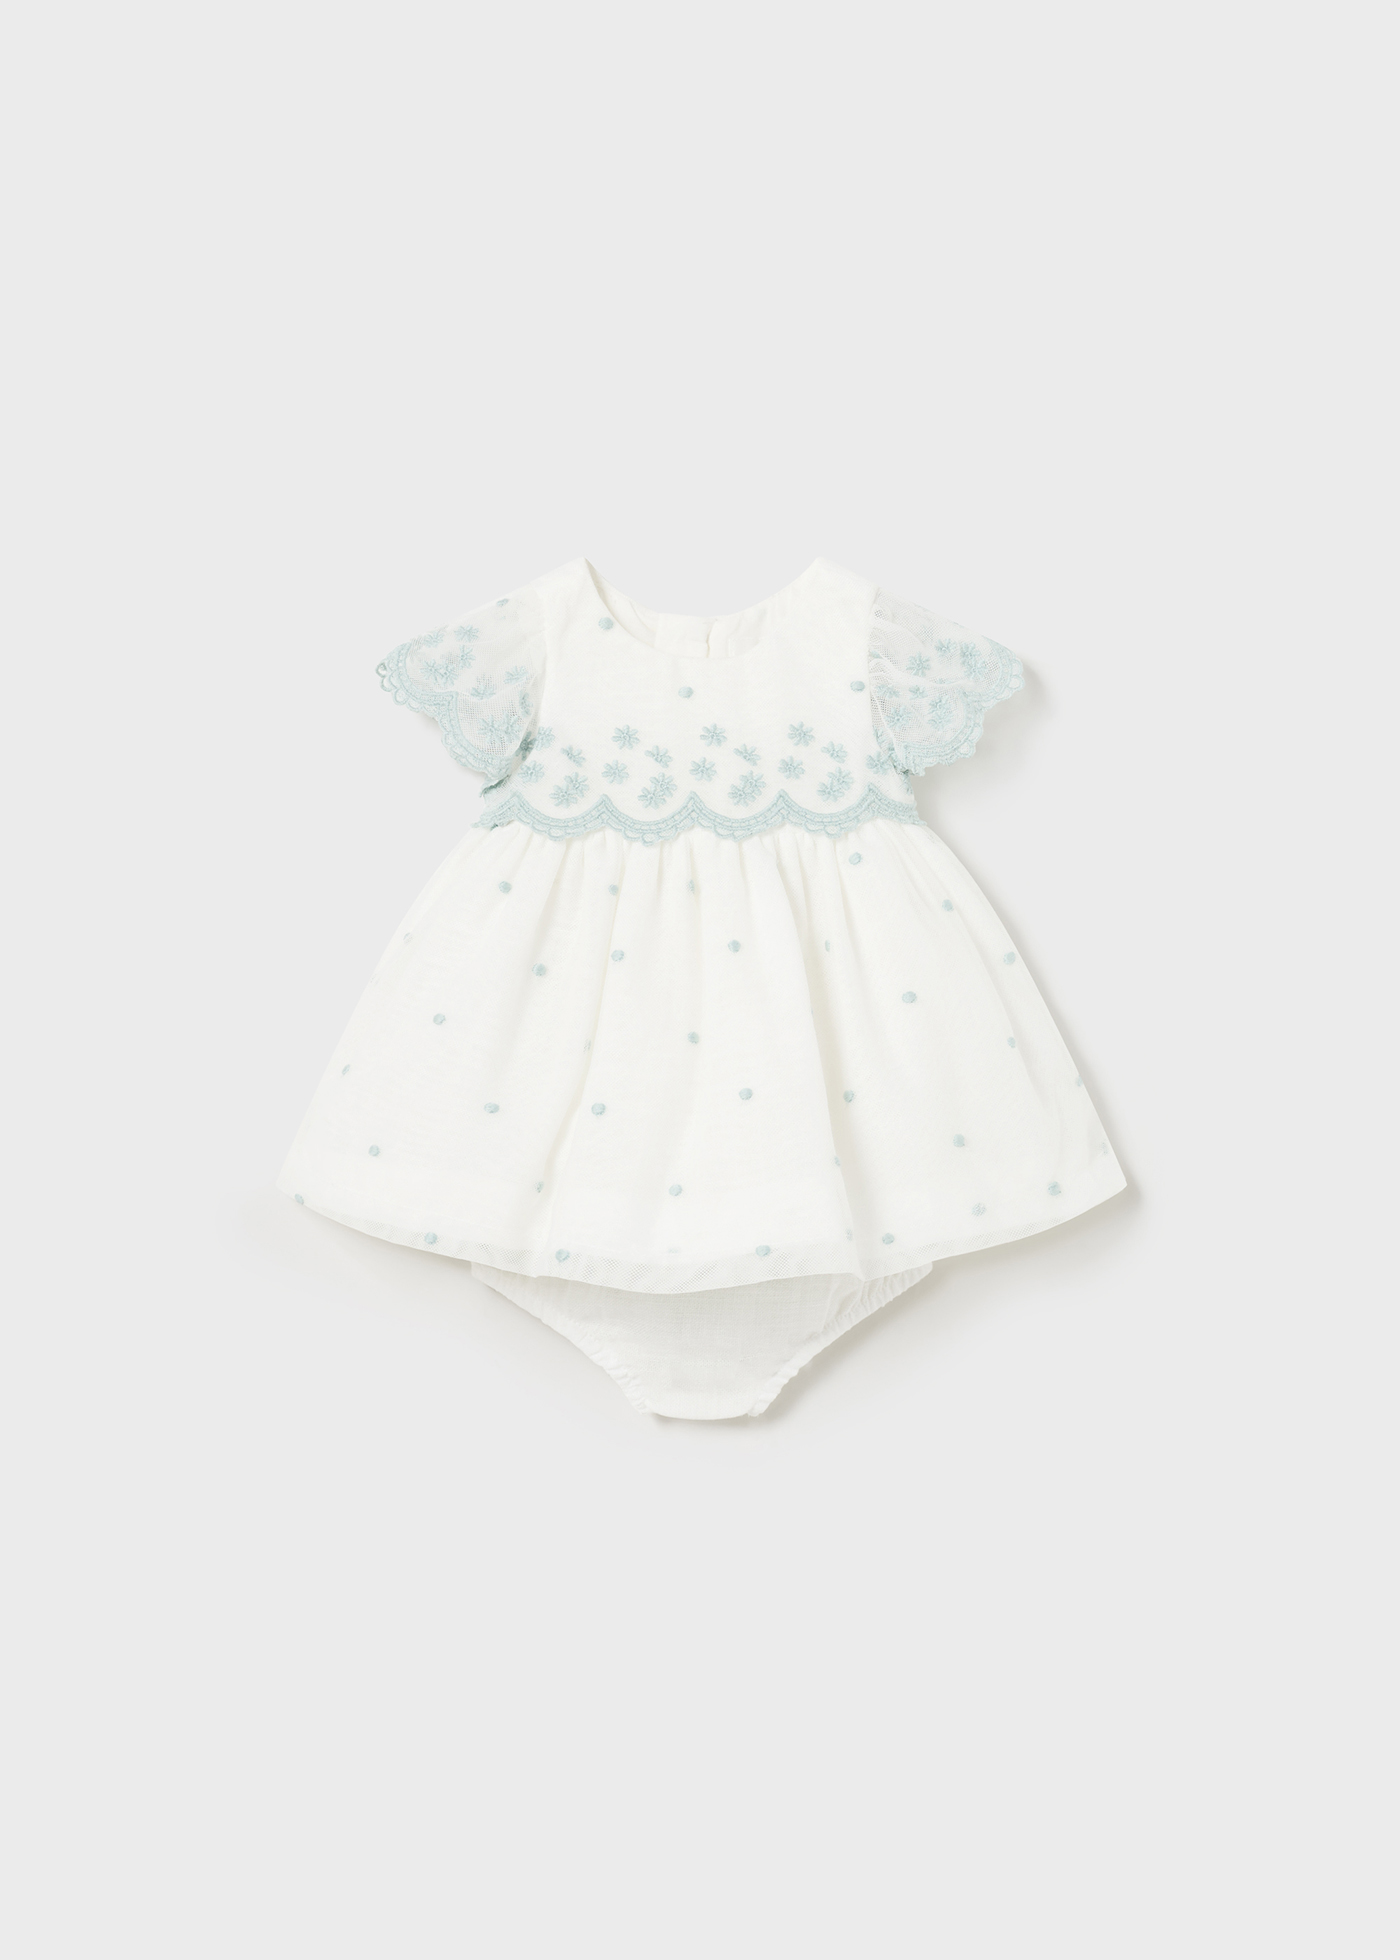 Baby Girl Clothes George 0-3 Month 2pc Pink & Black Velvet Silk Dress | eBay